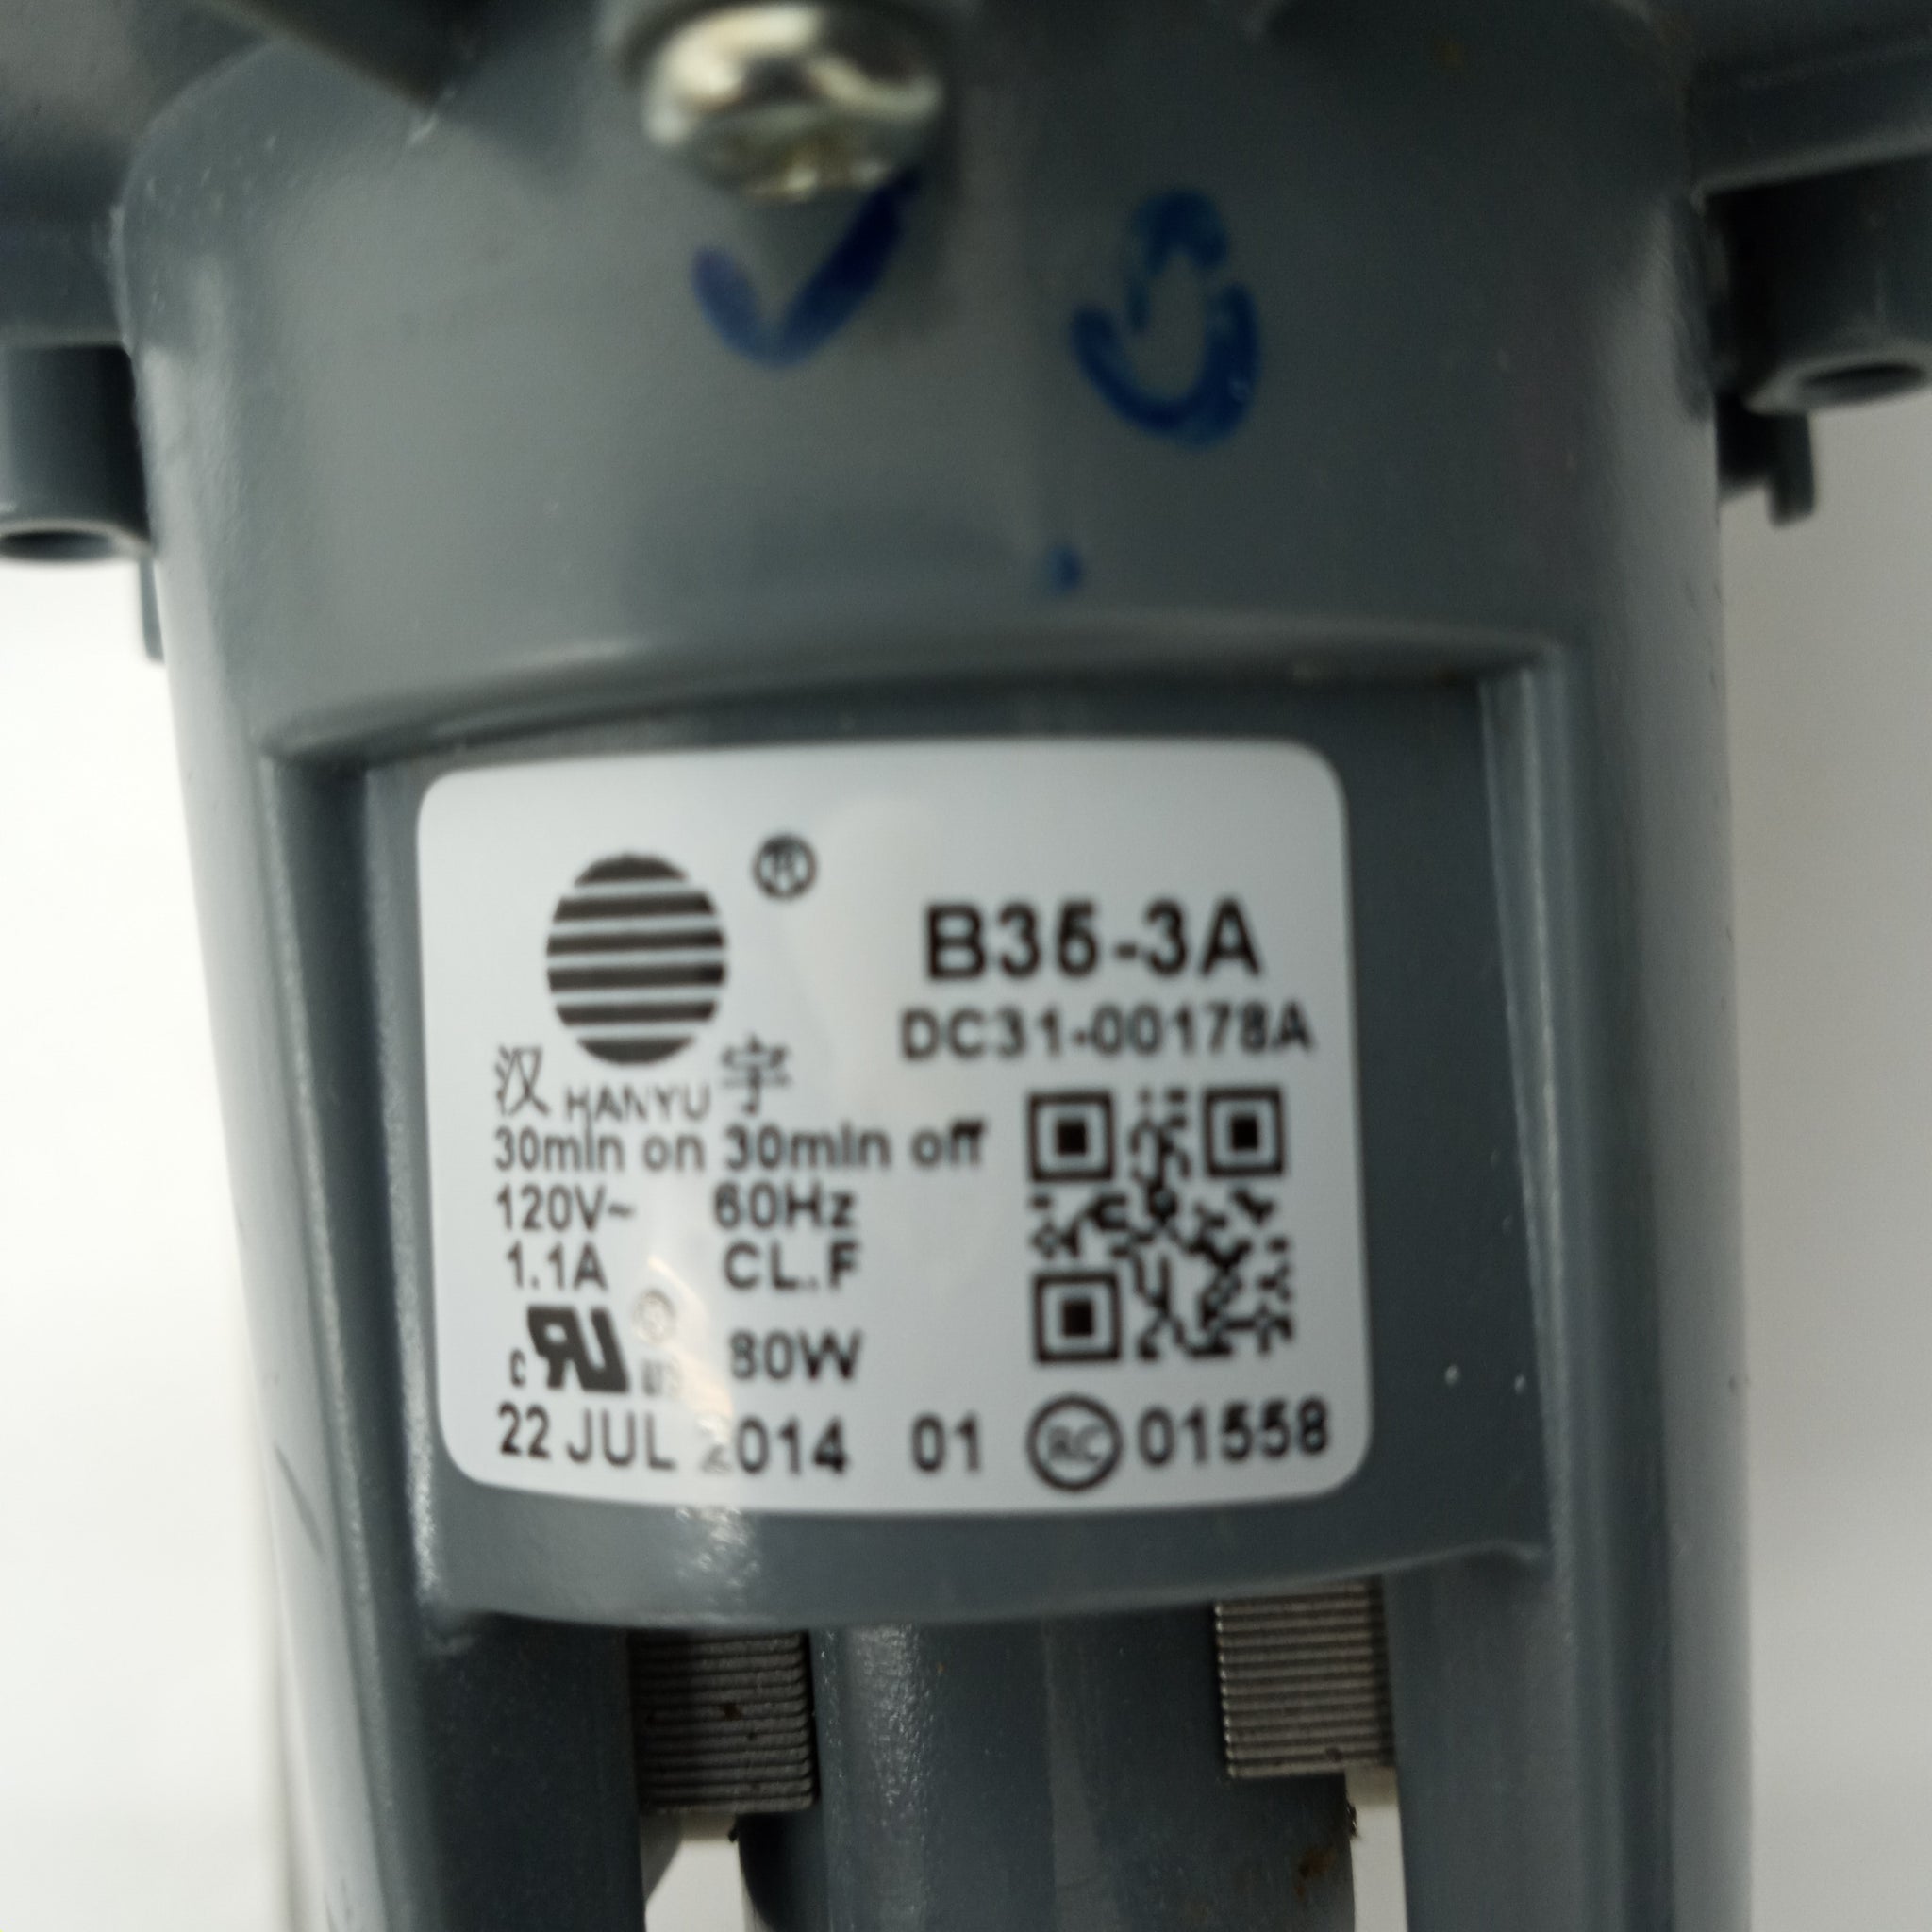 Samsung Washer Drain Pump Motor B35-3A DC31-00178A